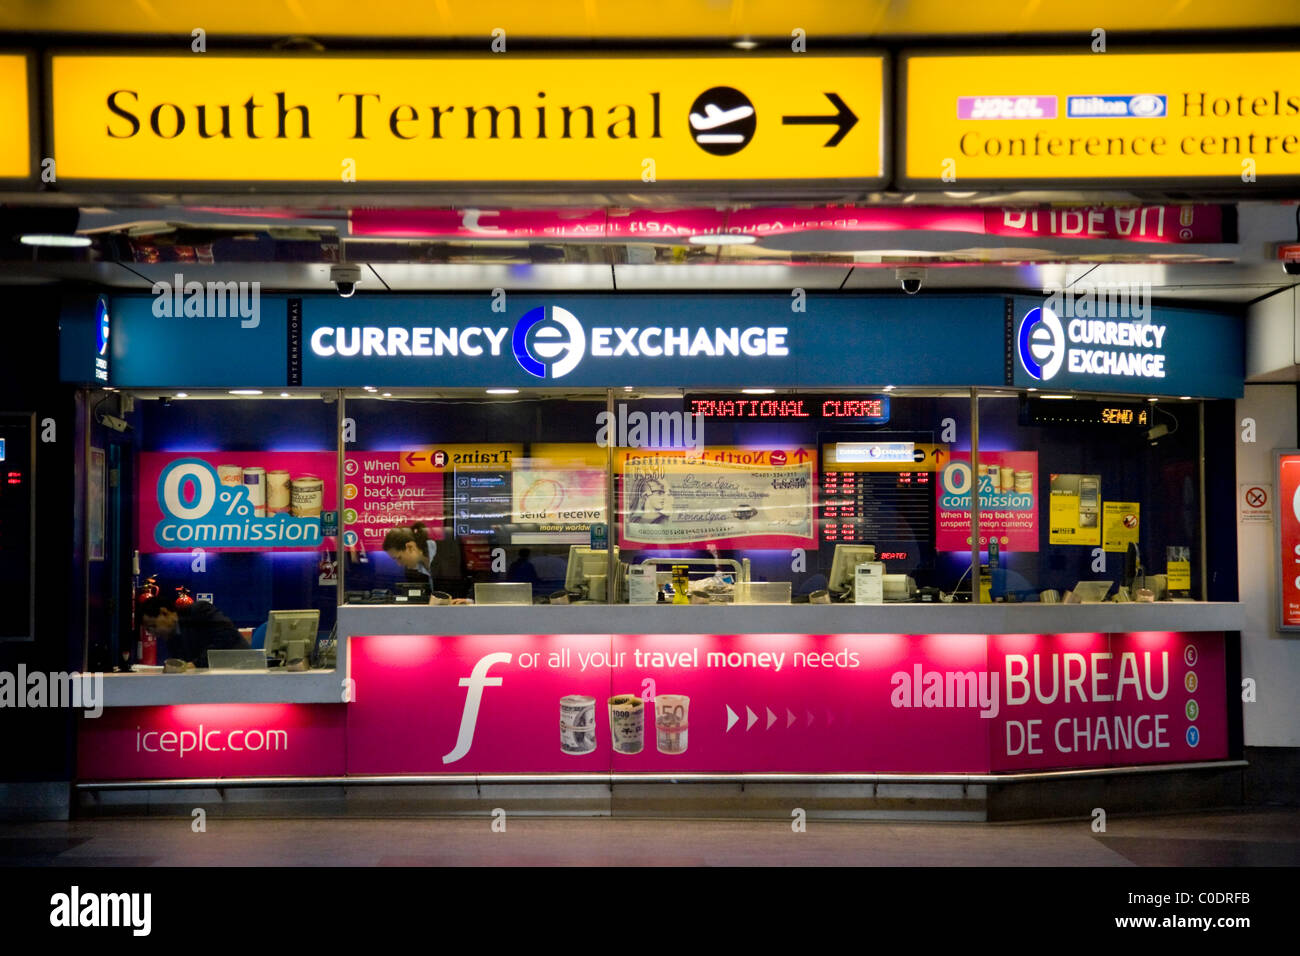 Bureau de Change operated by International Currency Exchange – 'ICE'  Plc bureau at South Terminal, Gatwick airport. London. UK Stock Photo